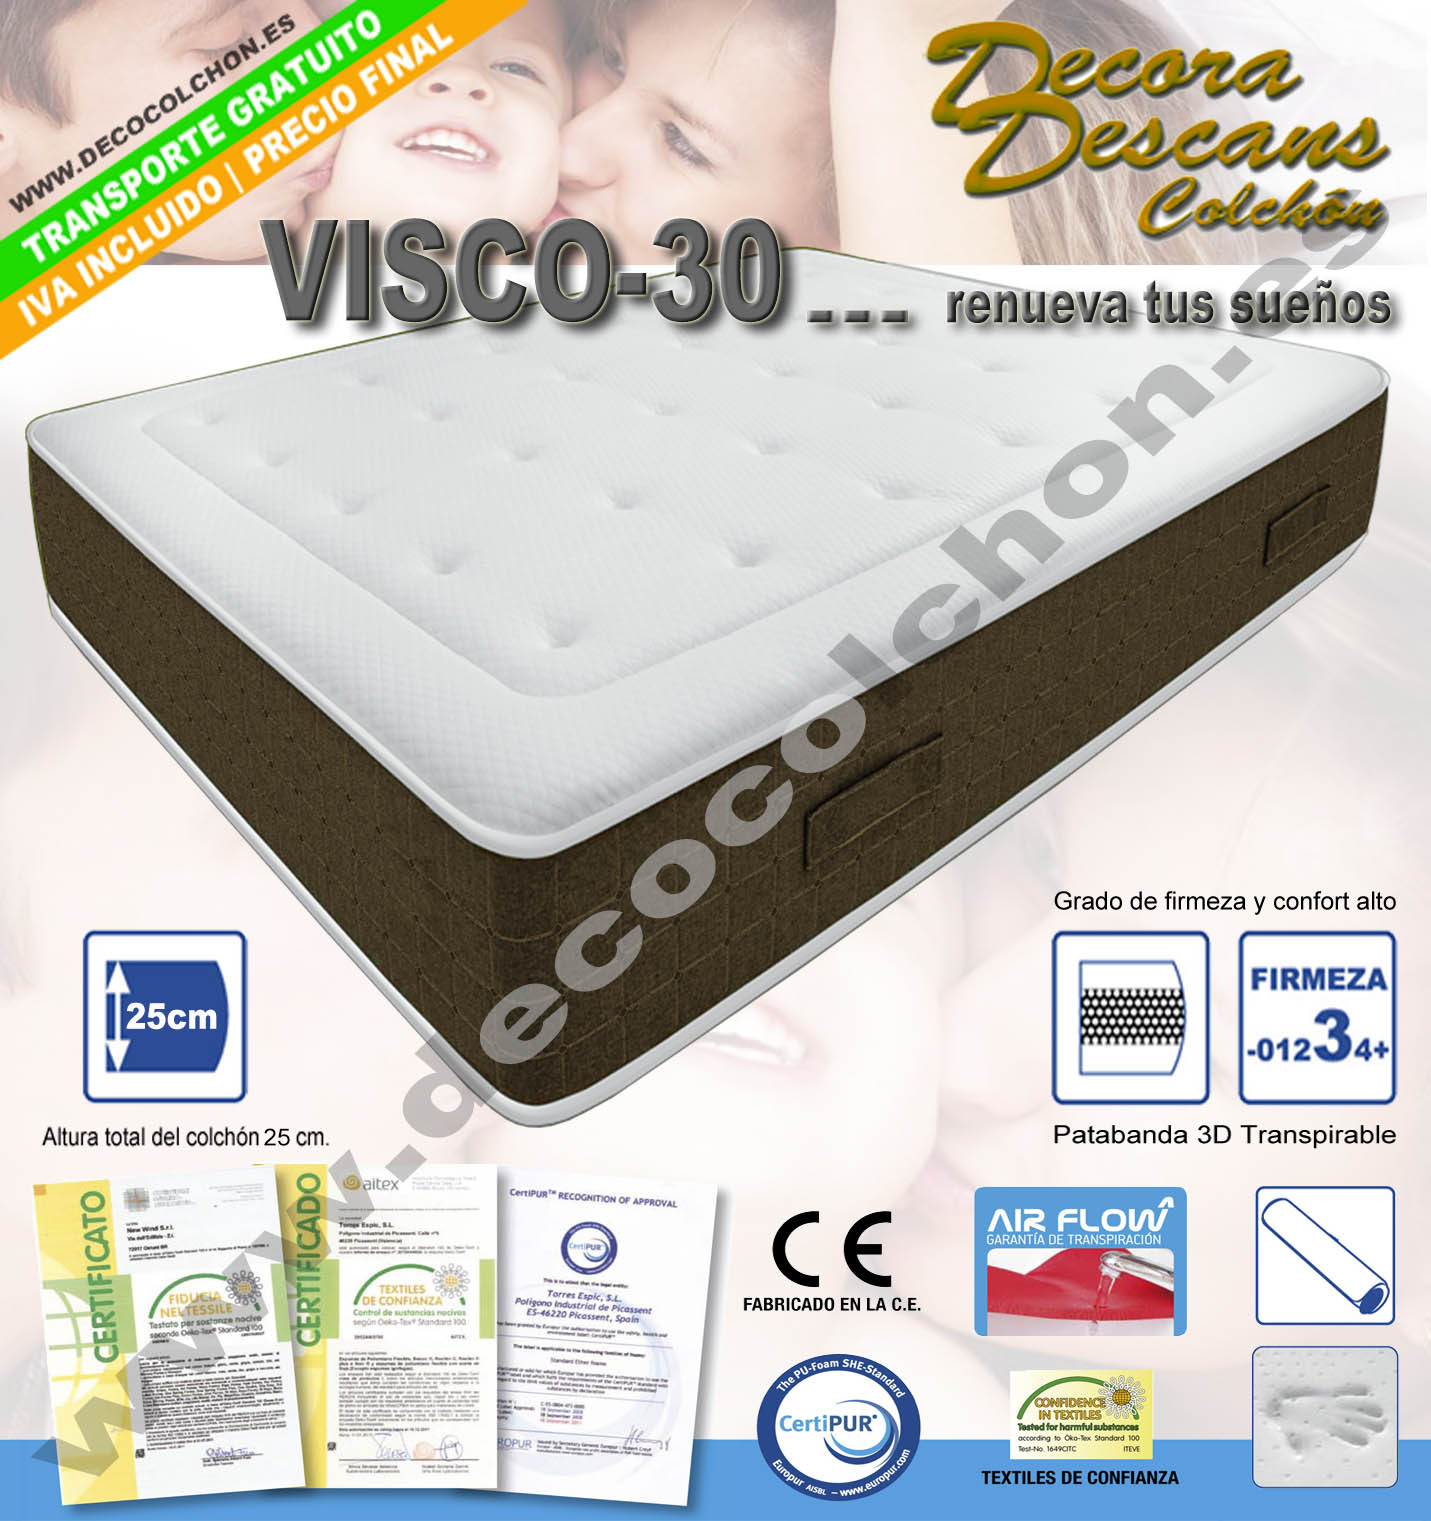 COLCHON VISCO-30 viscoelástica-HR | Decora Descans www.decocolchon.es